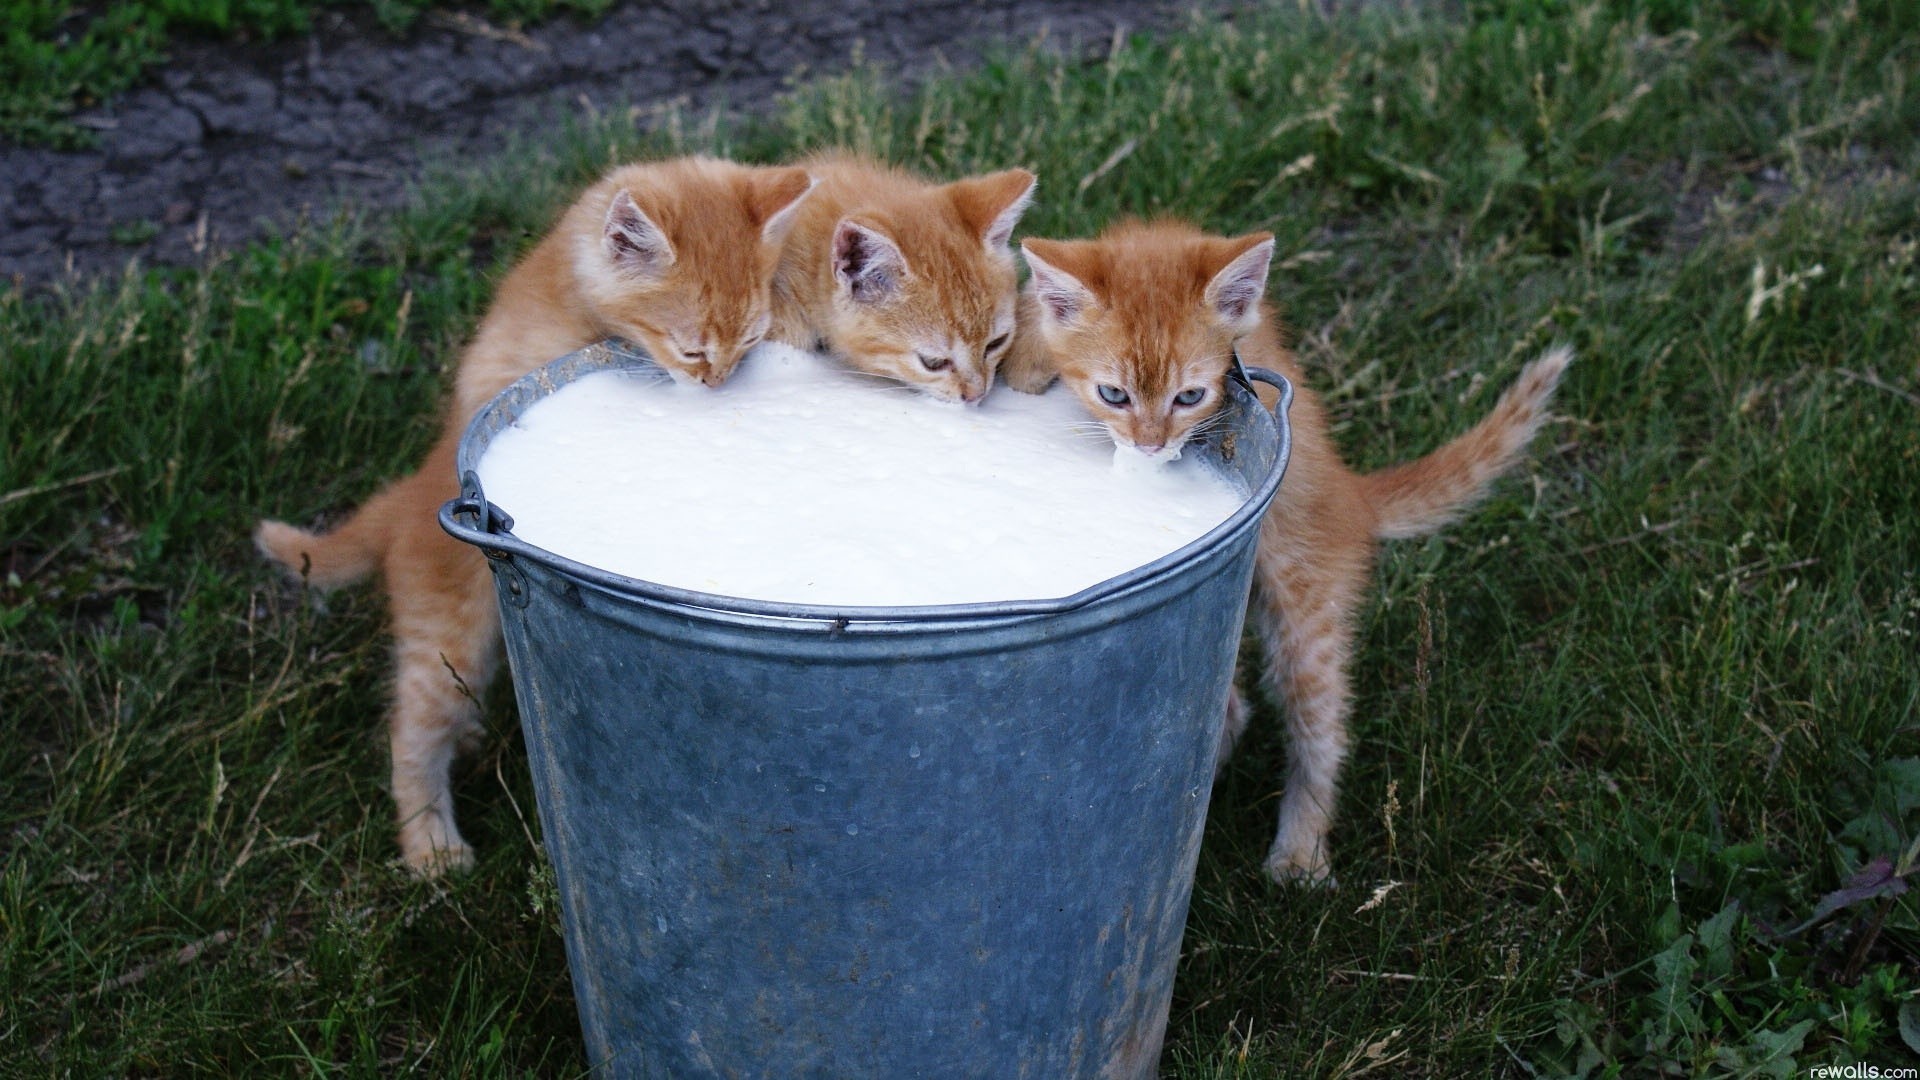 General 1920x1080 cats kittens milk animals baby animals feline mammals outdoors